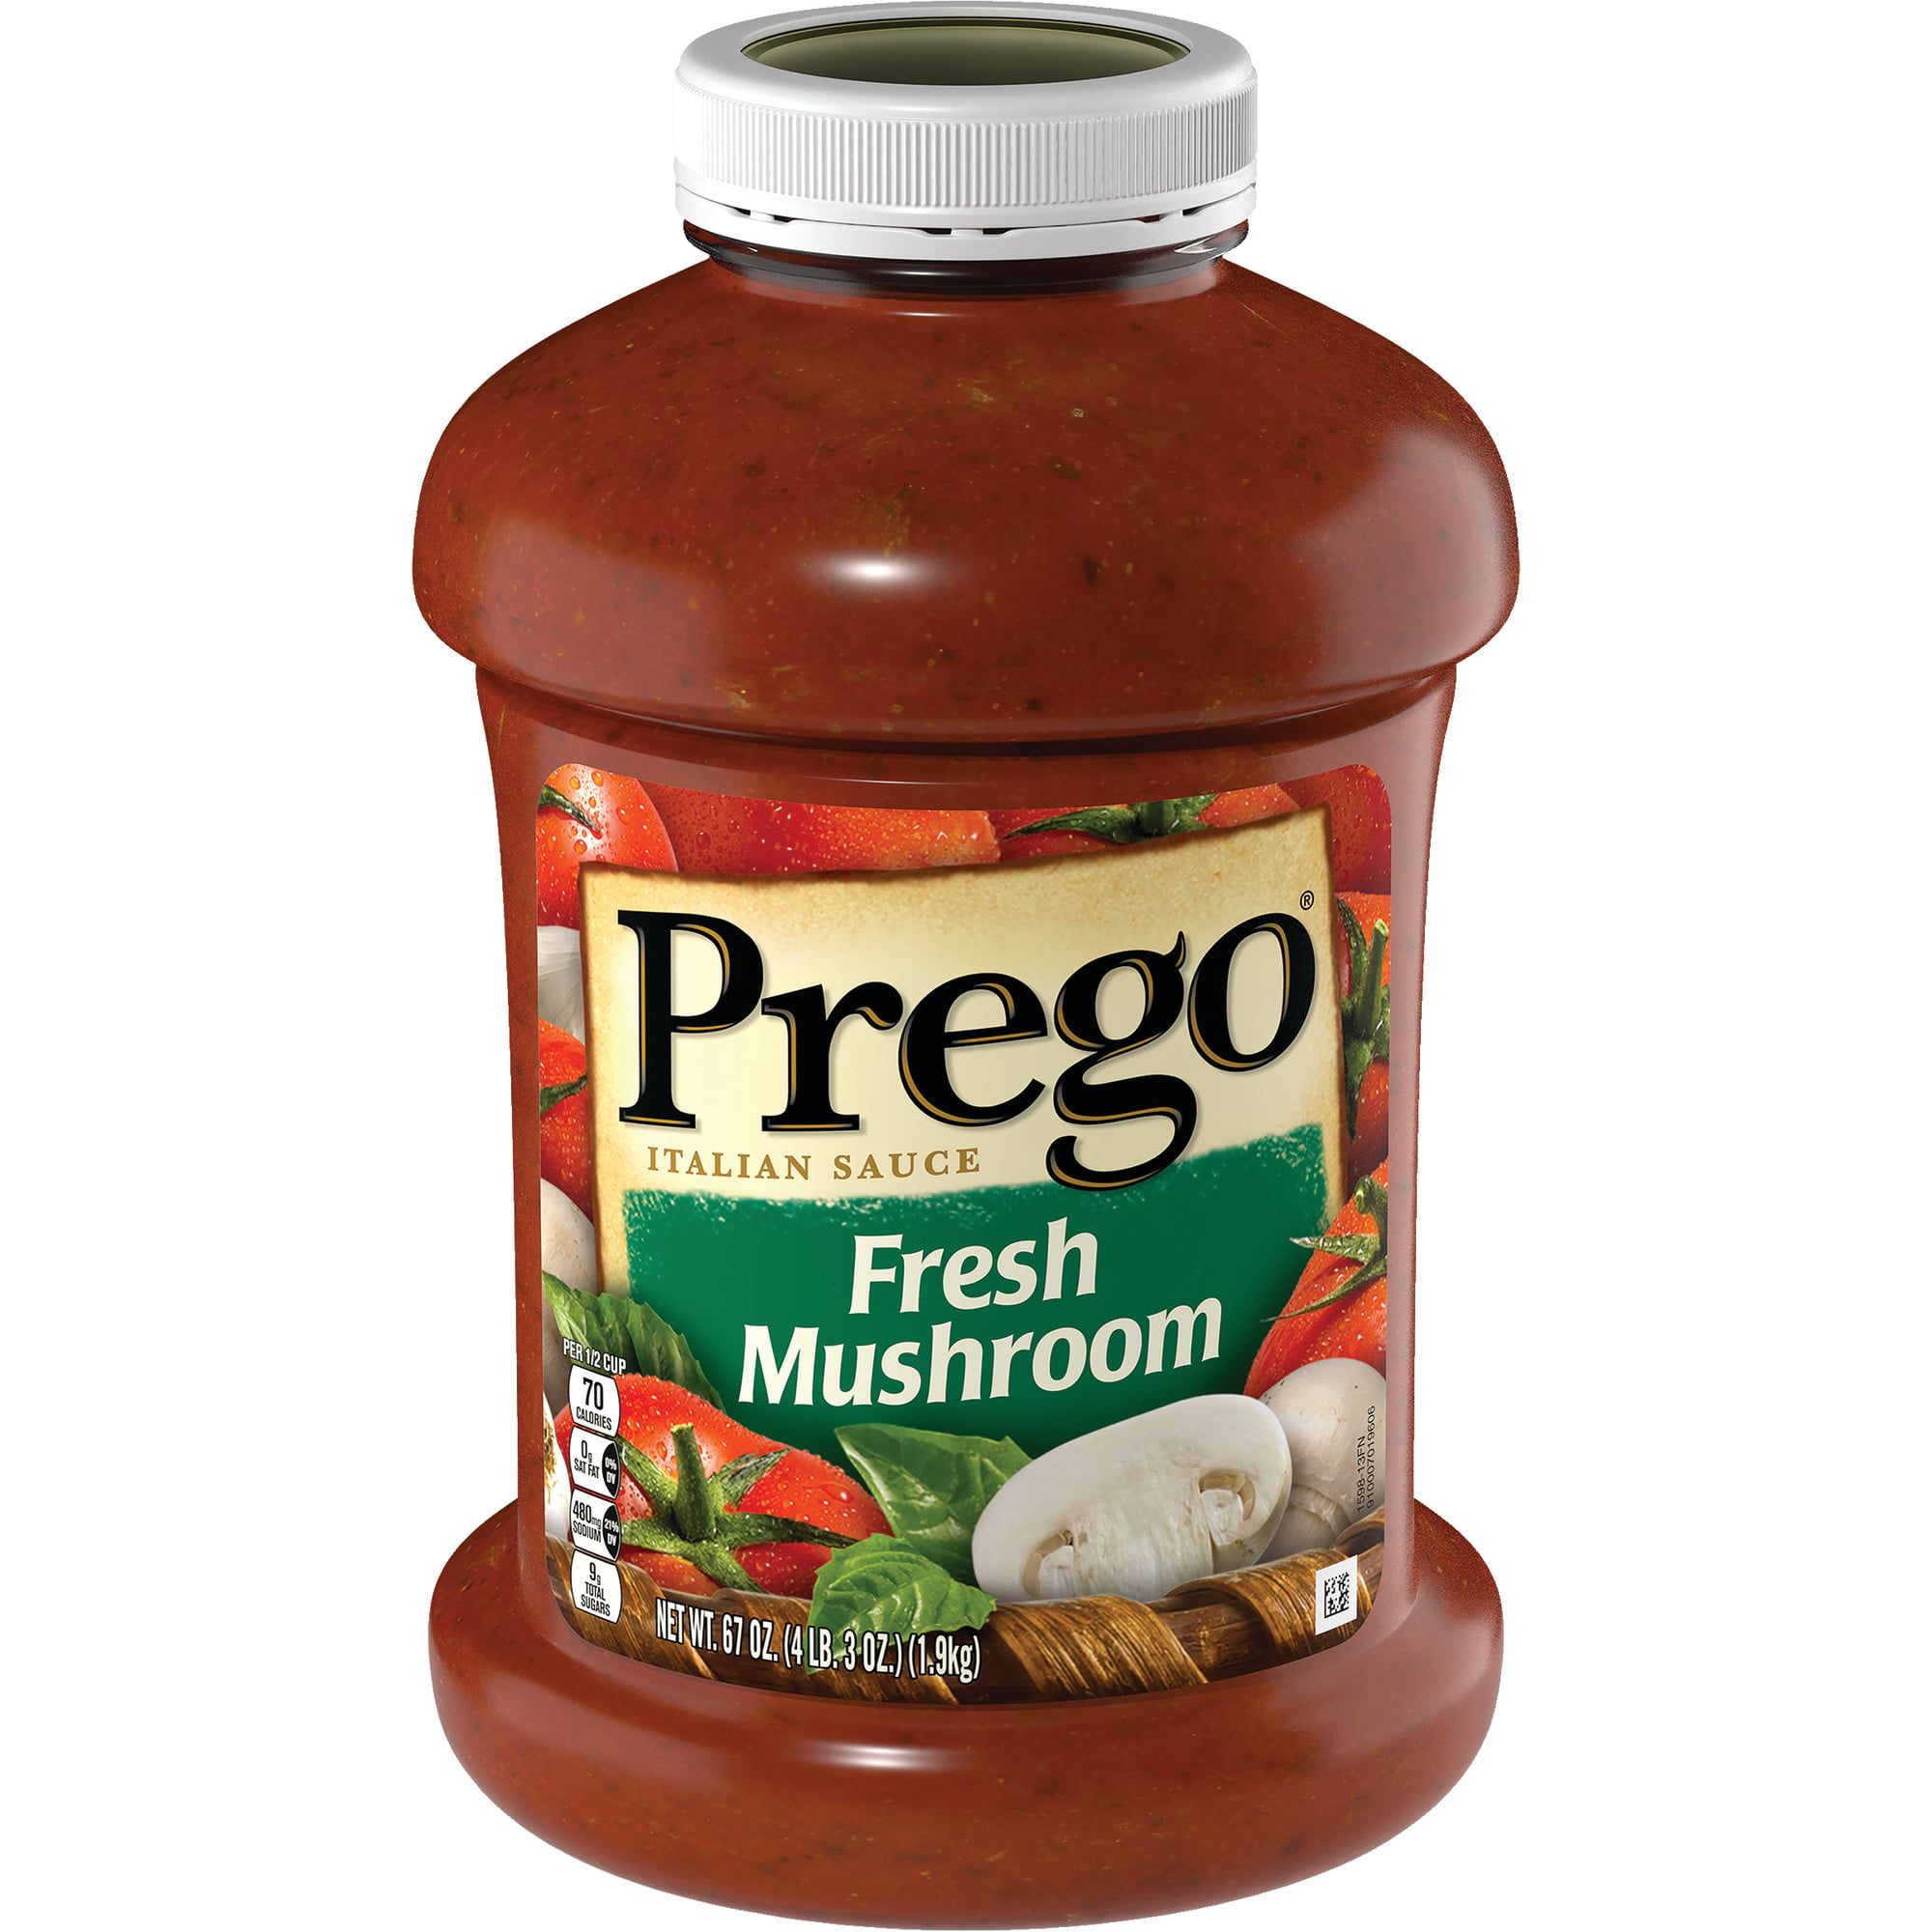 Prego Pasta Sauce, Italian Tomato Sauce with Fresh Mushrooms, 67 Ounce ...